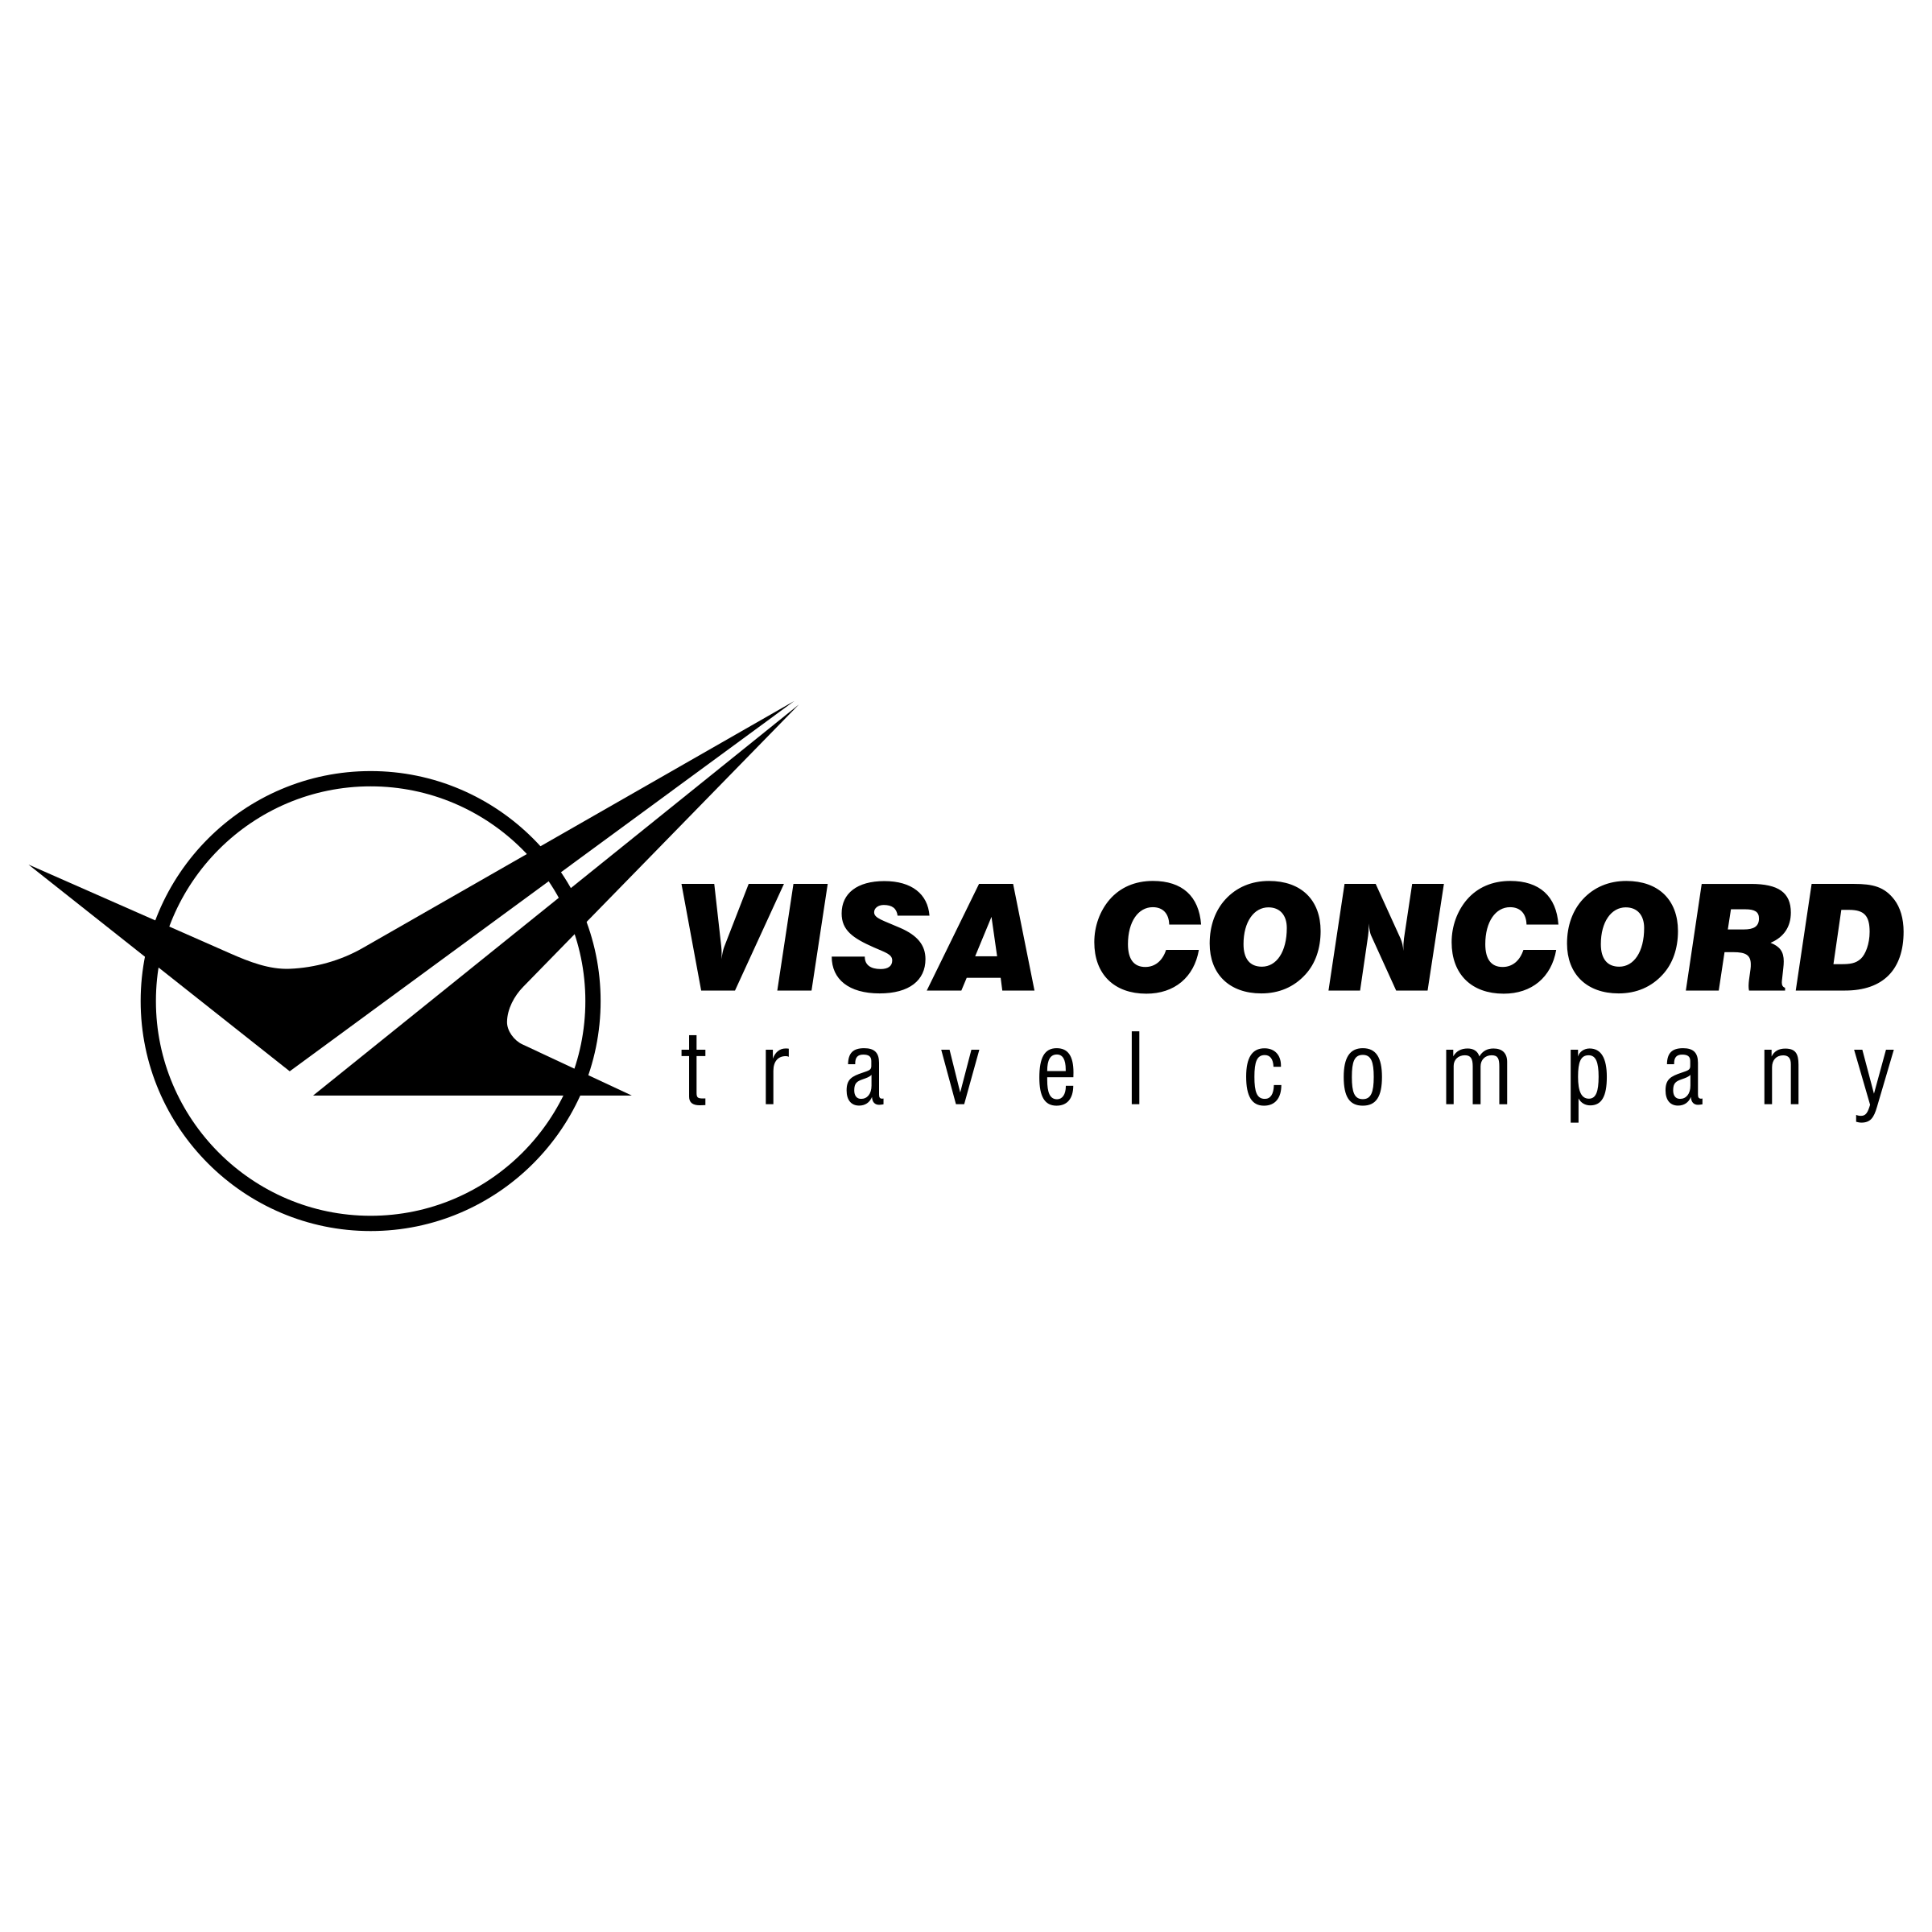 Concord Logo - Visa Concord Logo PNG Transparent & SVG Vector